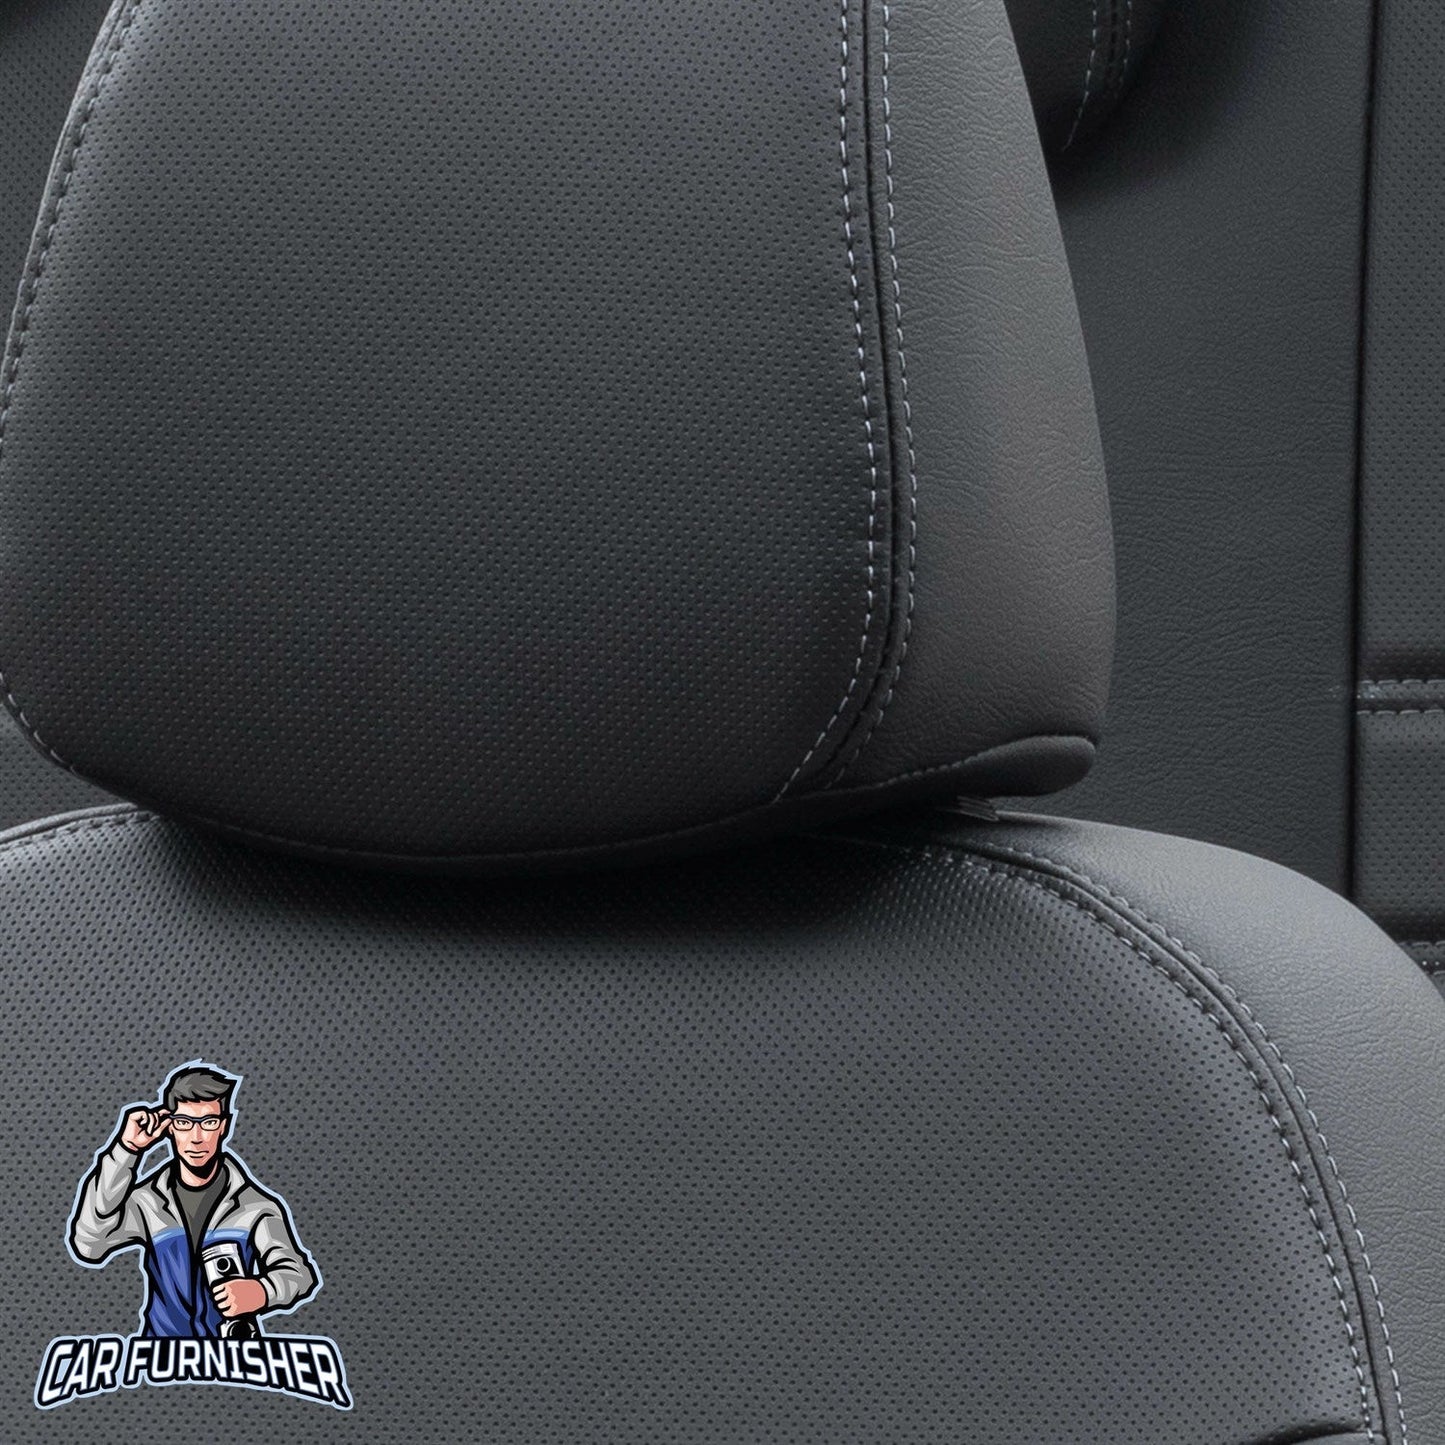 Mazda CX3 Seat Cover Istanbul Leather Design Black Leather